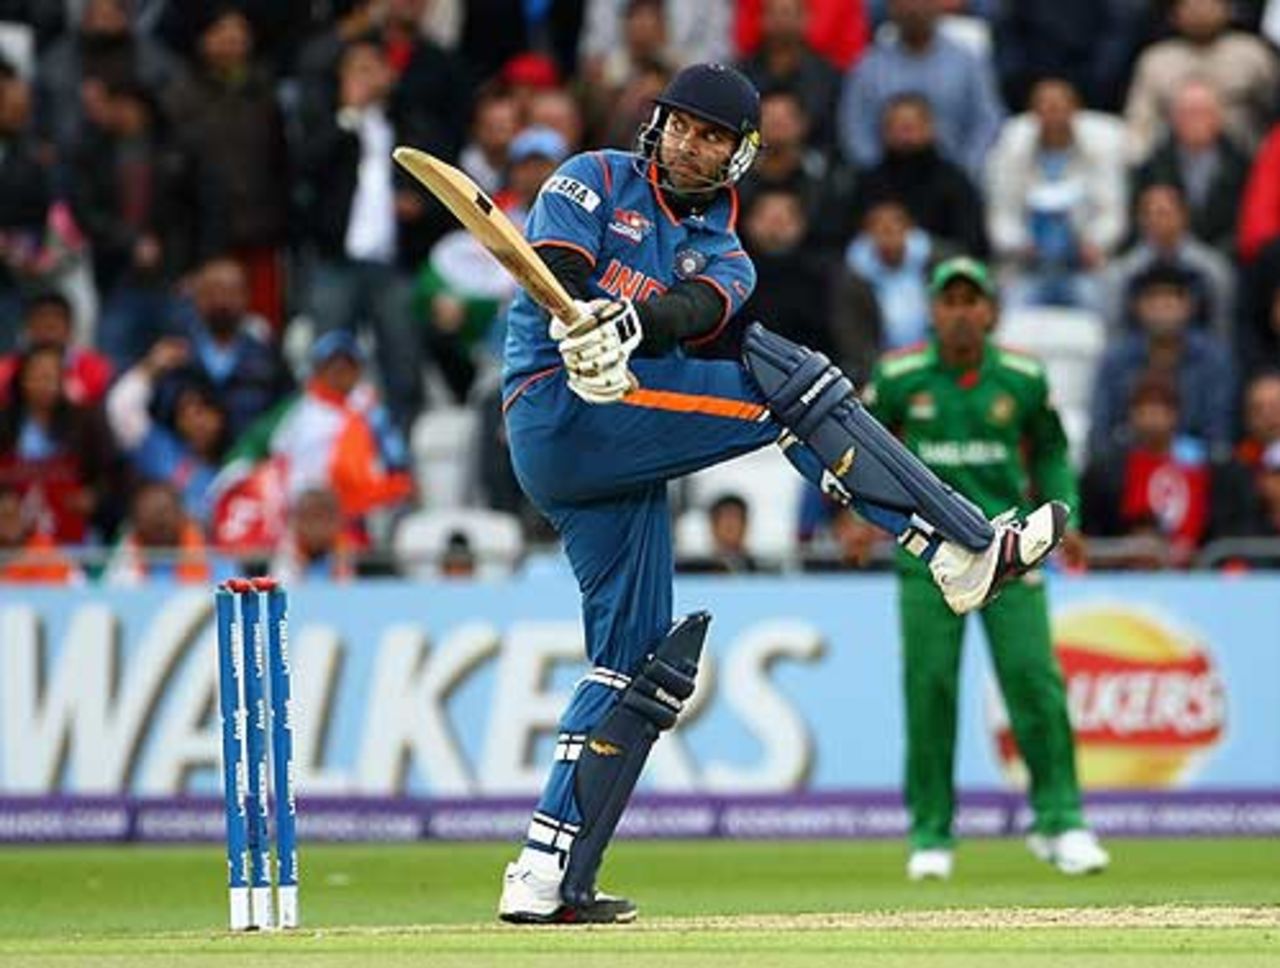 Yuvraj Singh slams a four behind square leg, Bangladesh v India, ICC World Twenty20, Trent Bridge, June 6, 2009